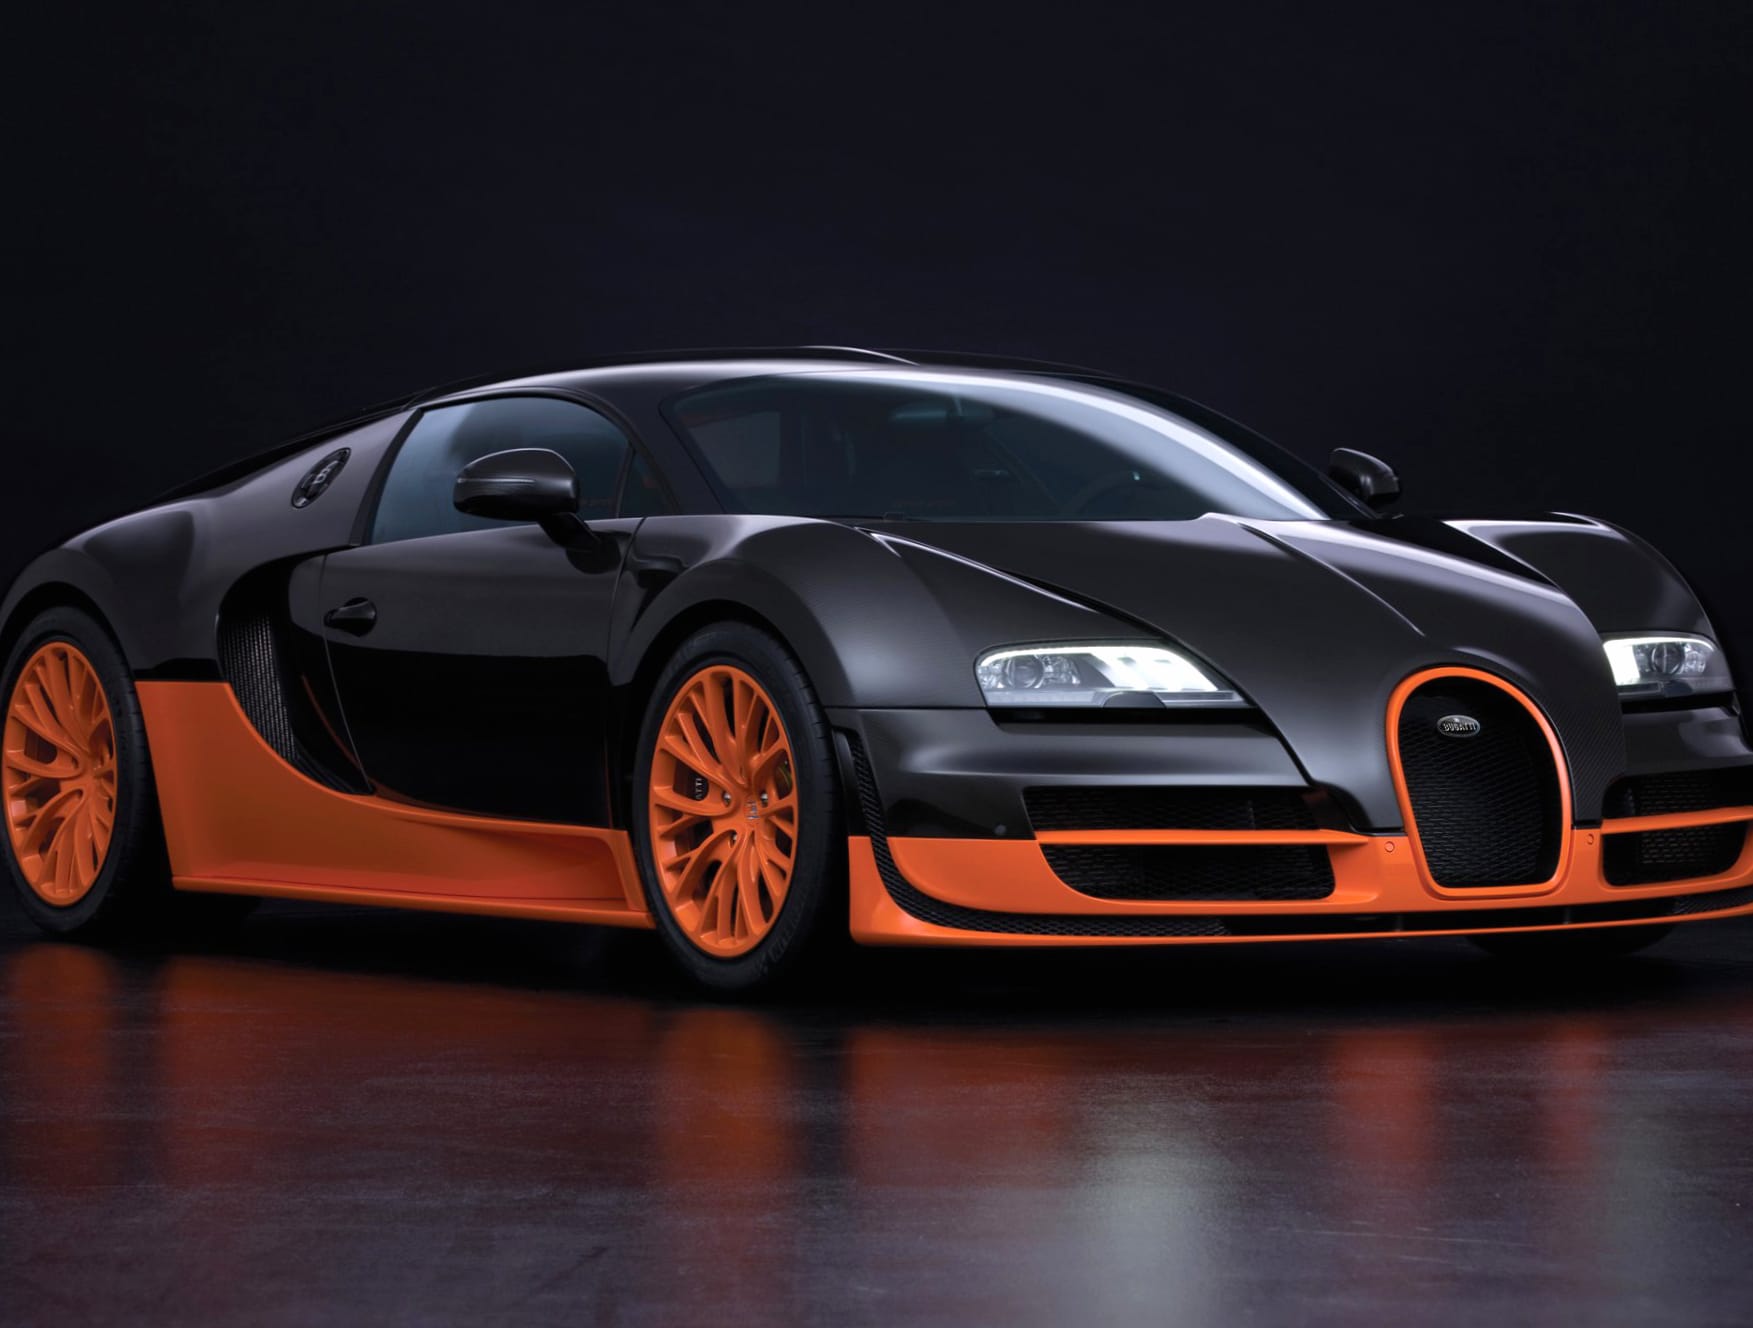 Bugatti Veyron 16-4 Super Sport at 1600 x 1200 size wallpapers HD quality